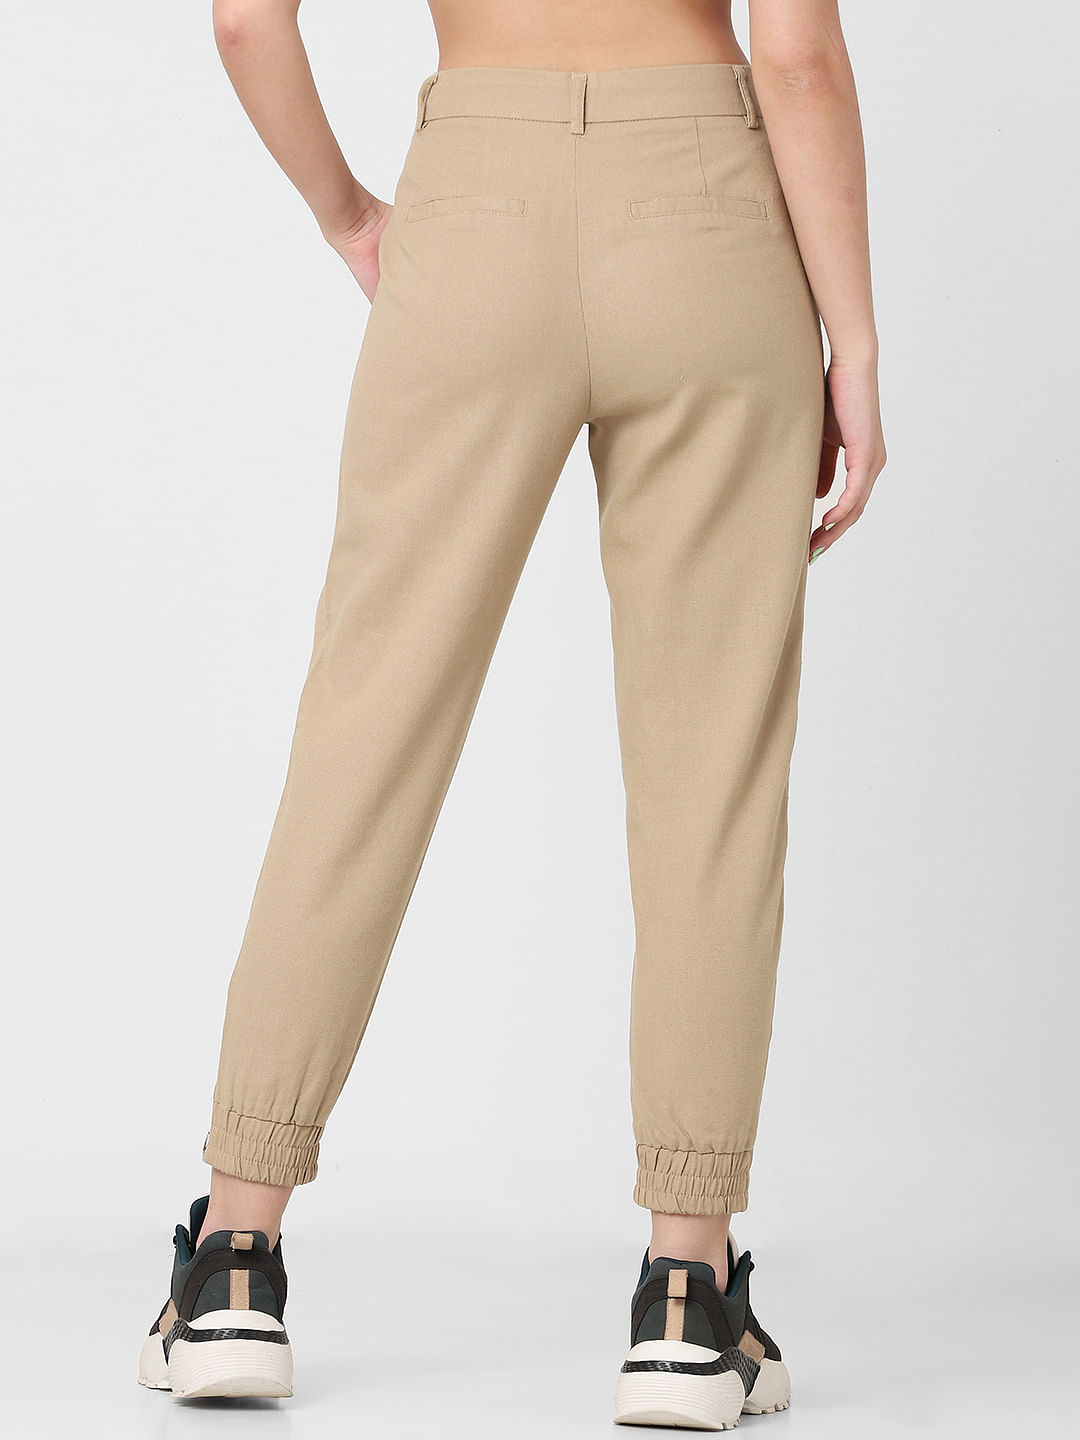 HUPOM Women'S Athletic Pants Womens Pants Suit Slacks High Waist Rise Long  Straight-Leg Khaki 2XL - Walmart.com